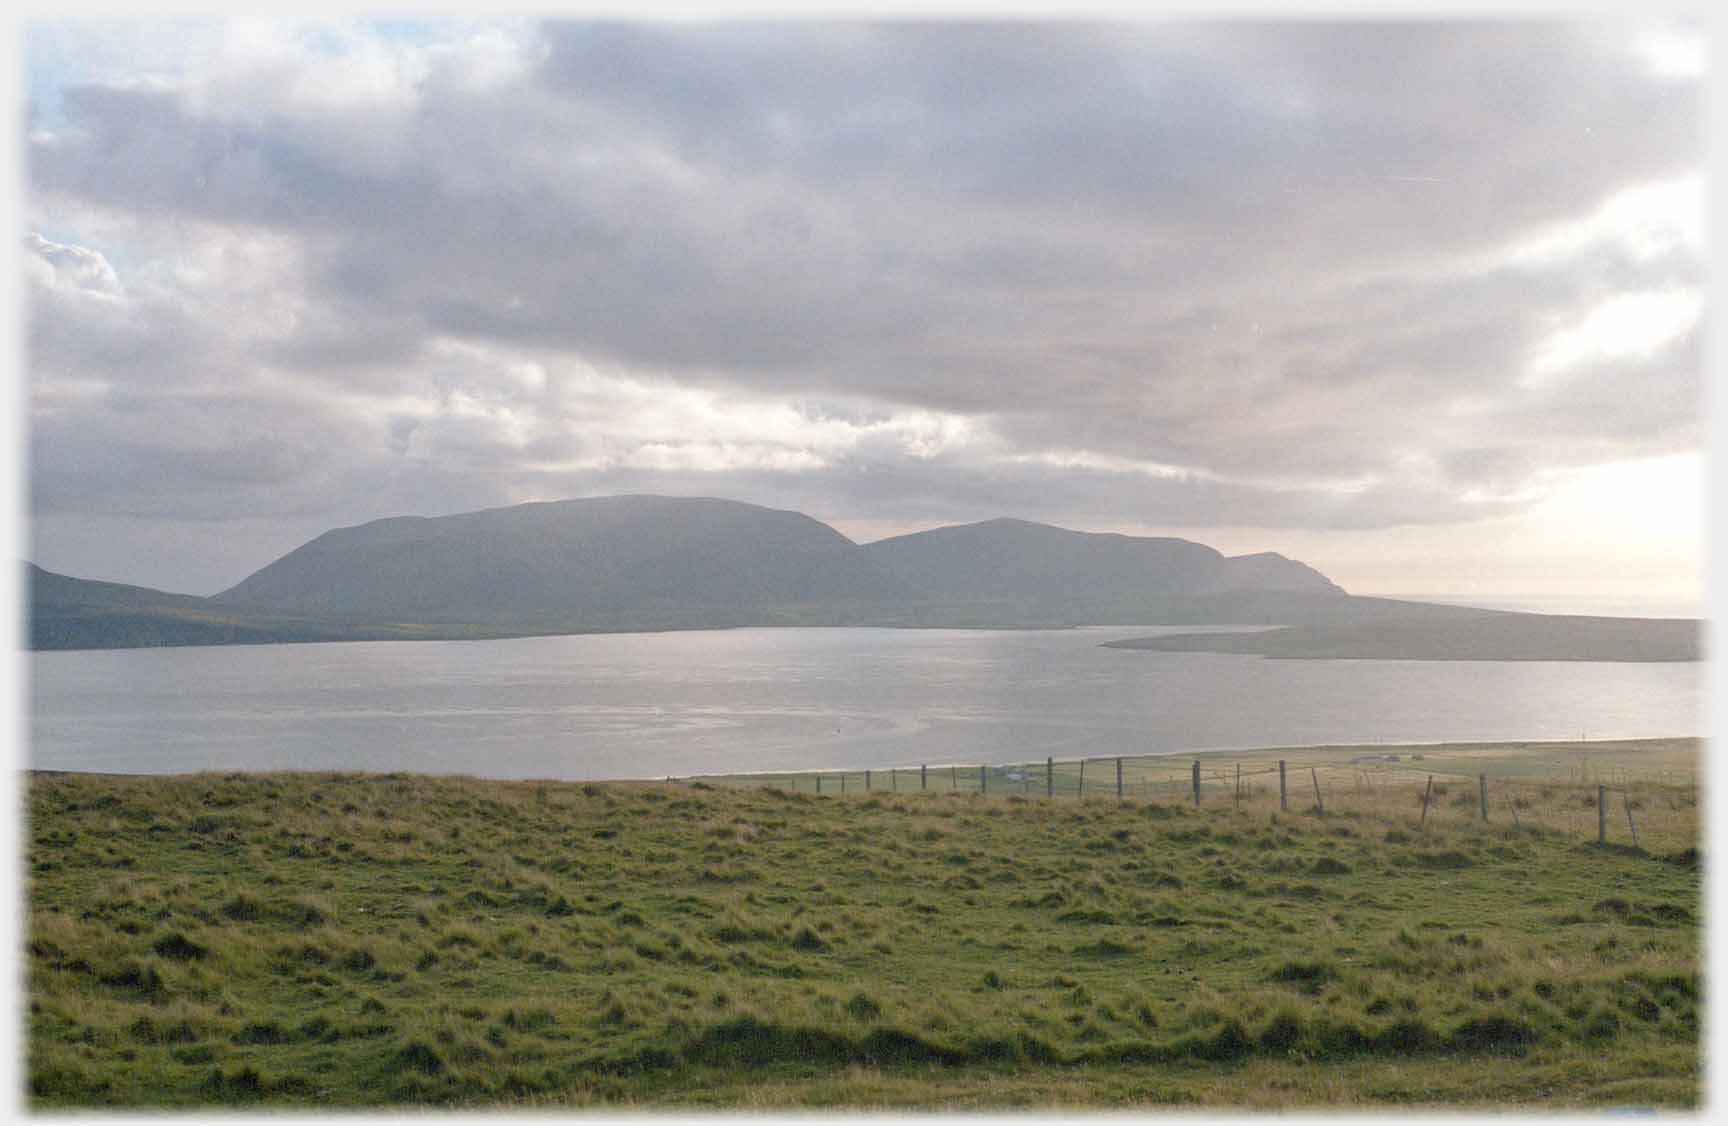 The main hills of Hoy across the sea.